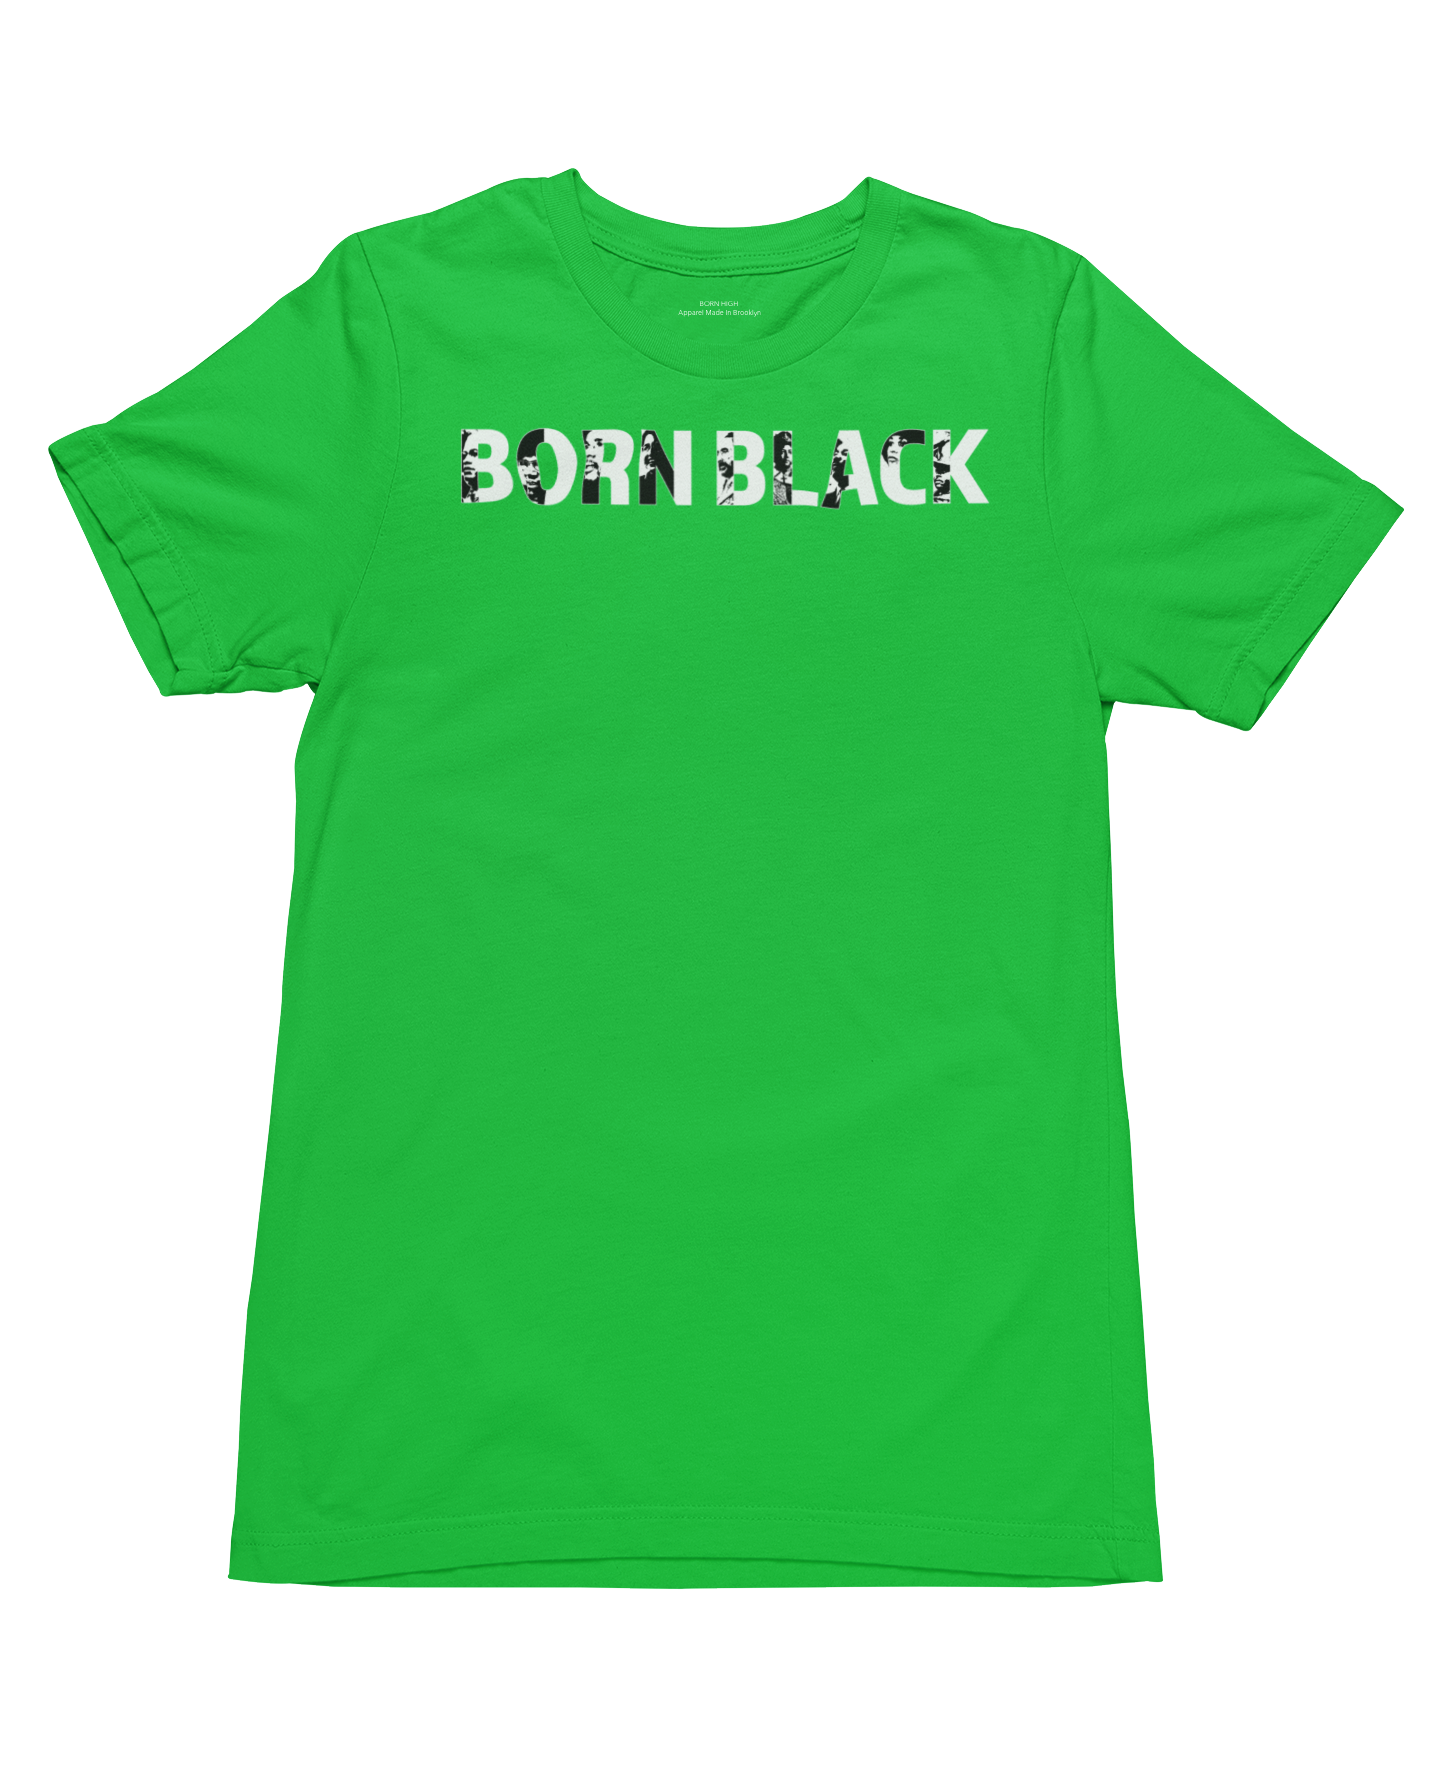 Born Black Heavy Ever Green Weight T-Shirt